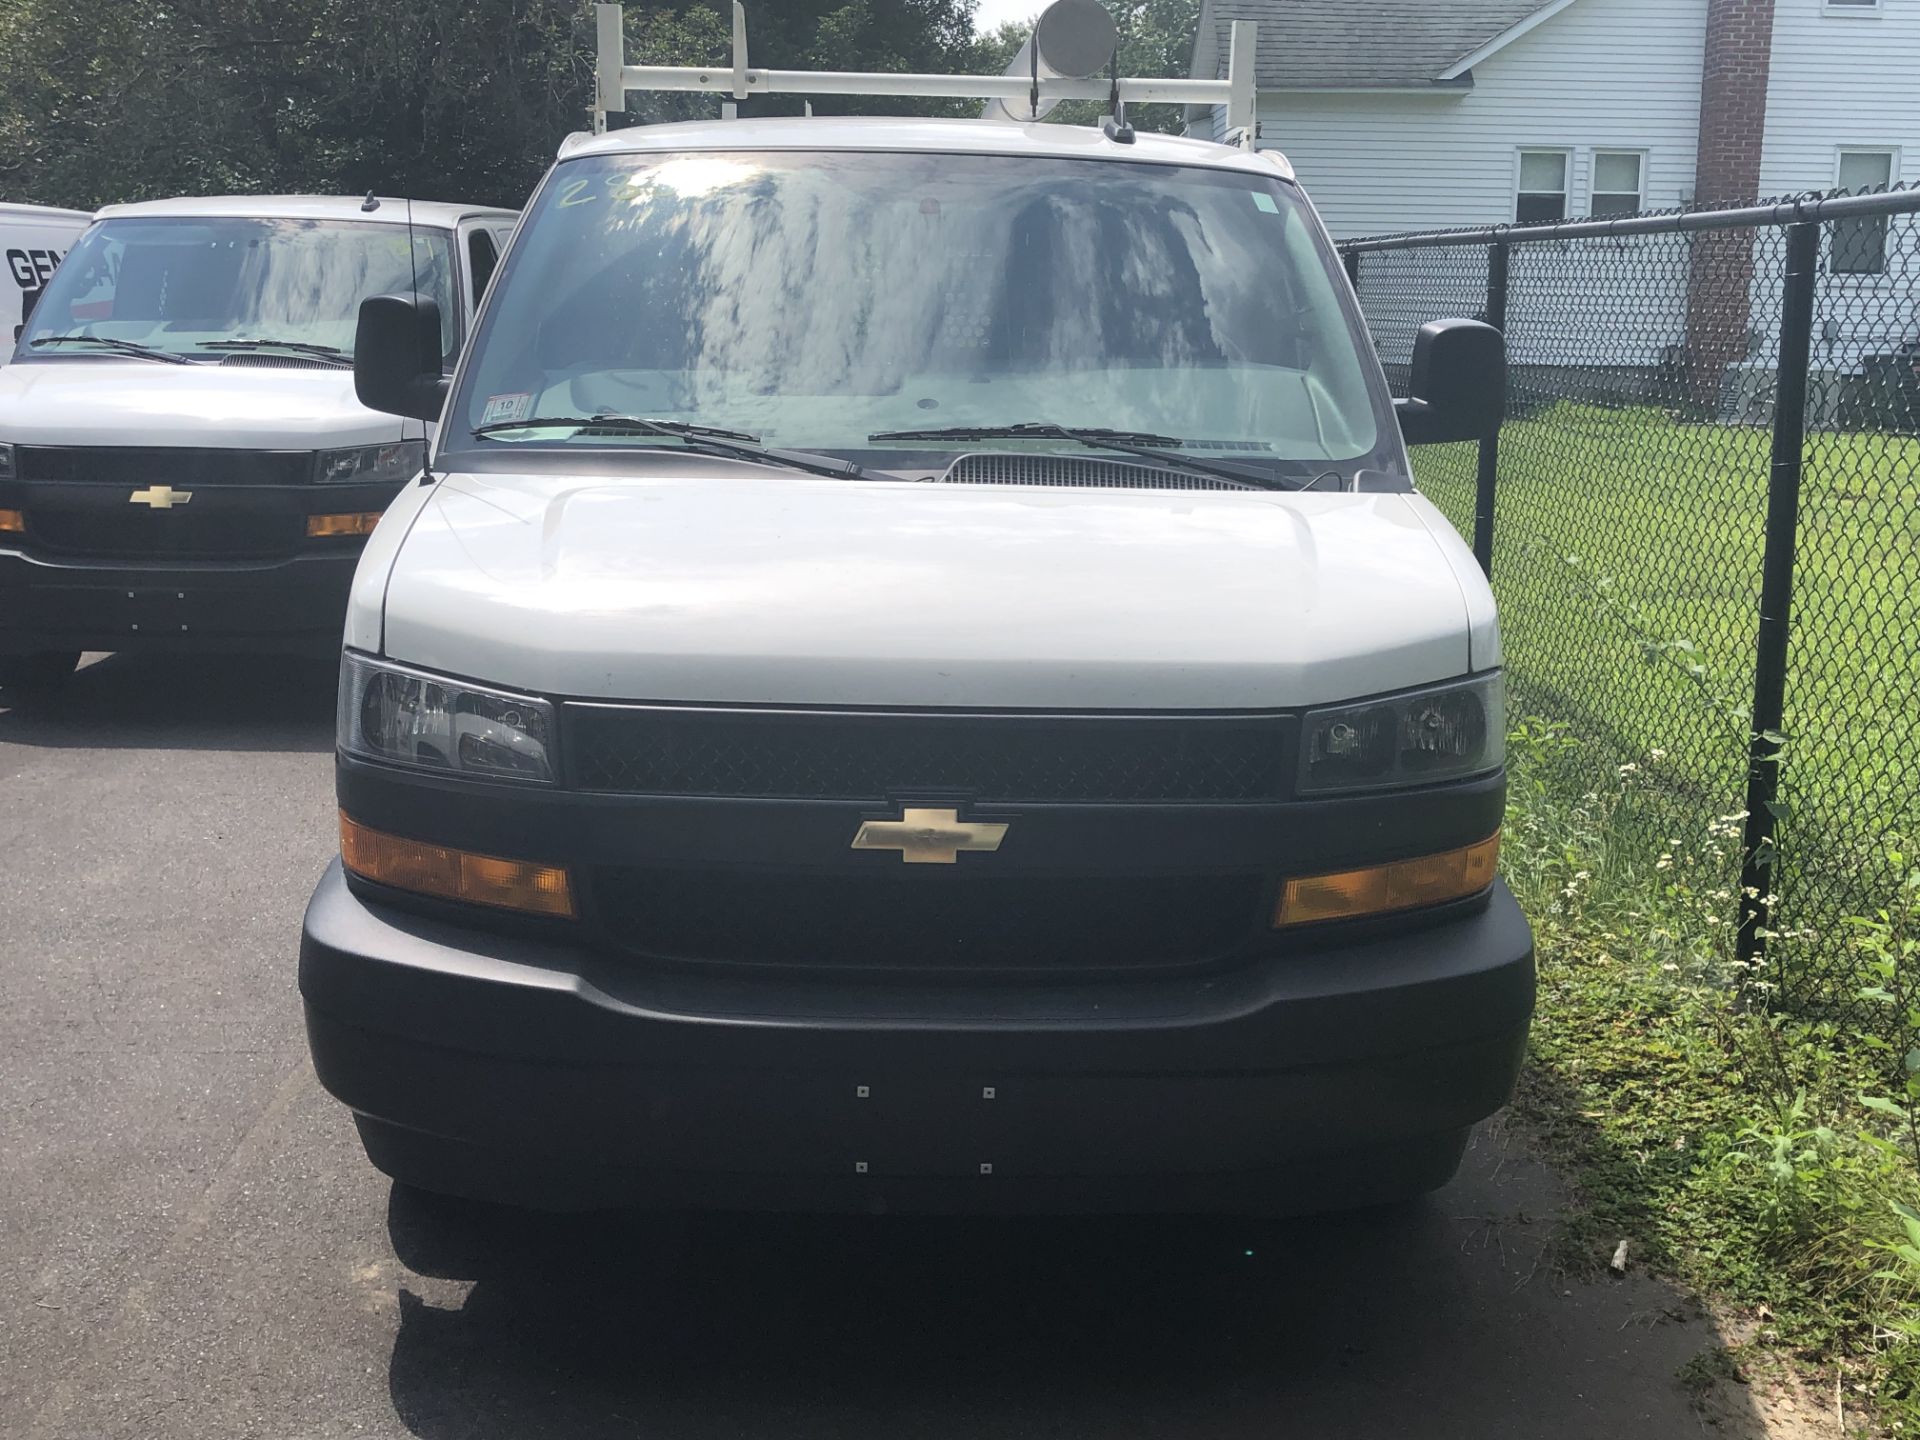 2018 Chevrolet Express Van w/Sec. Grate Shelving & Roof Rack, Odom: 18,700, Vin#: See Desc (TITLE)